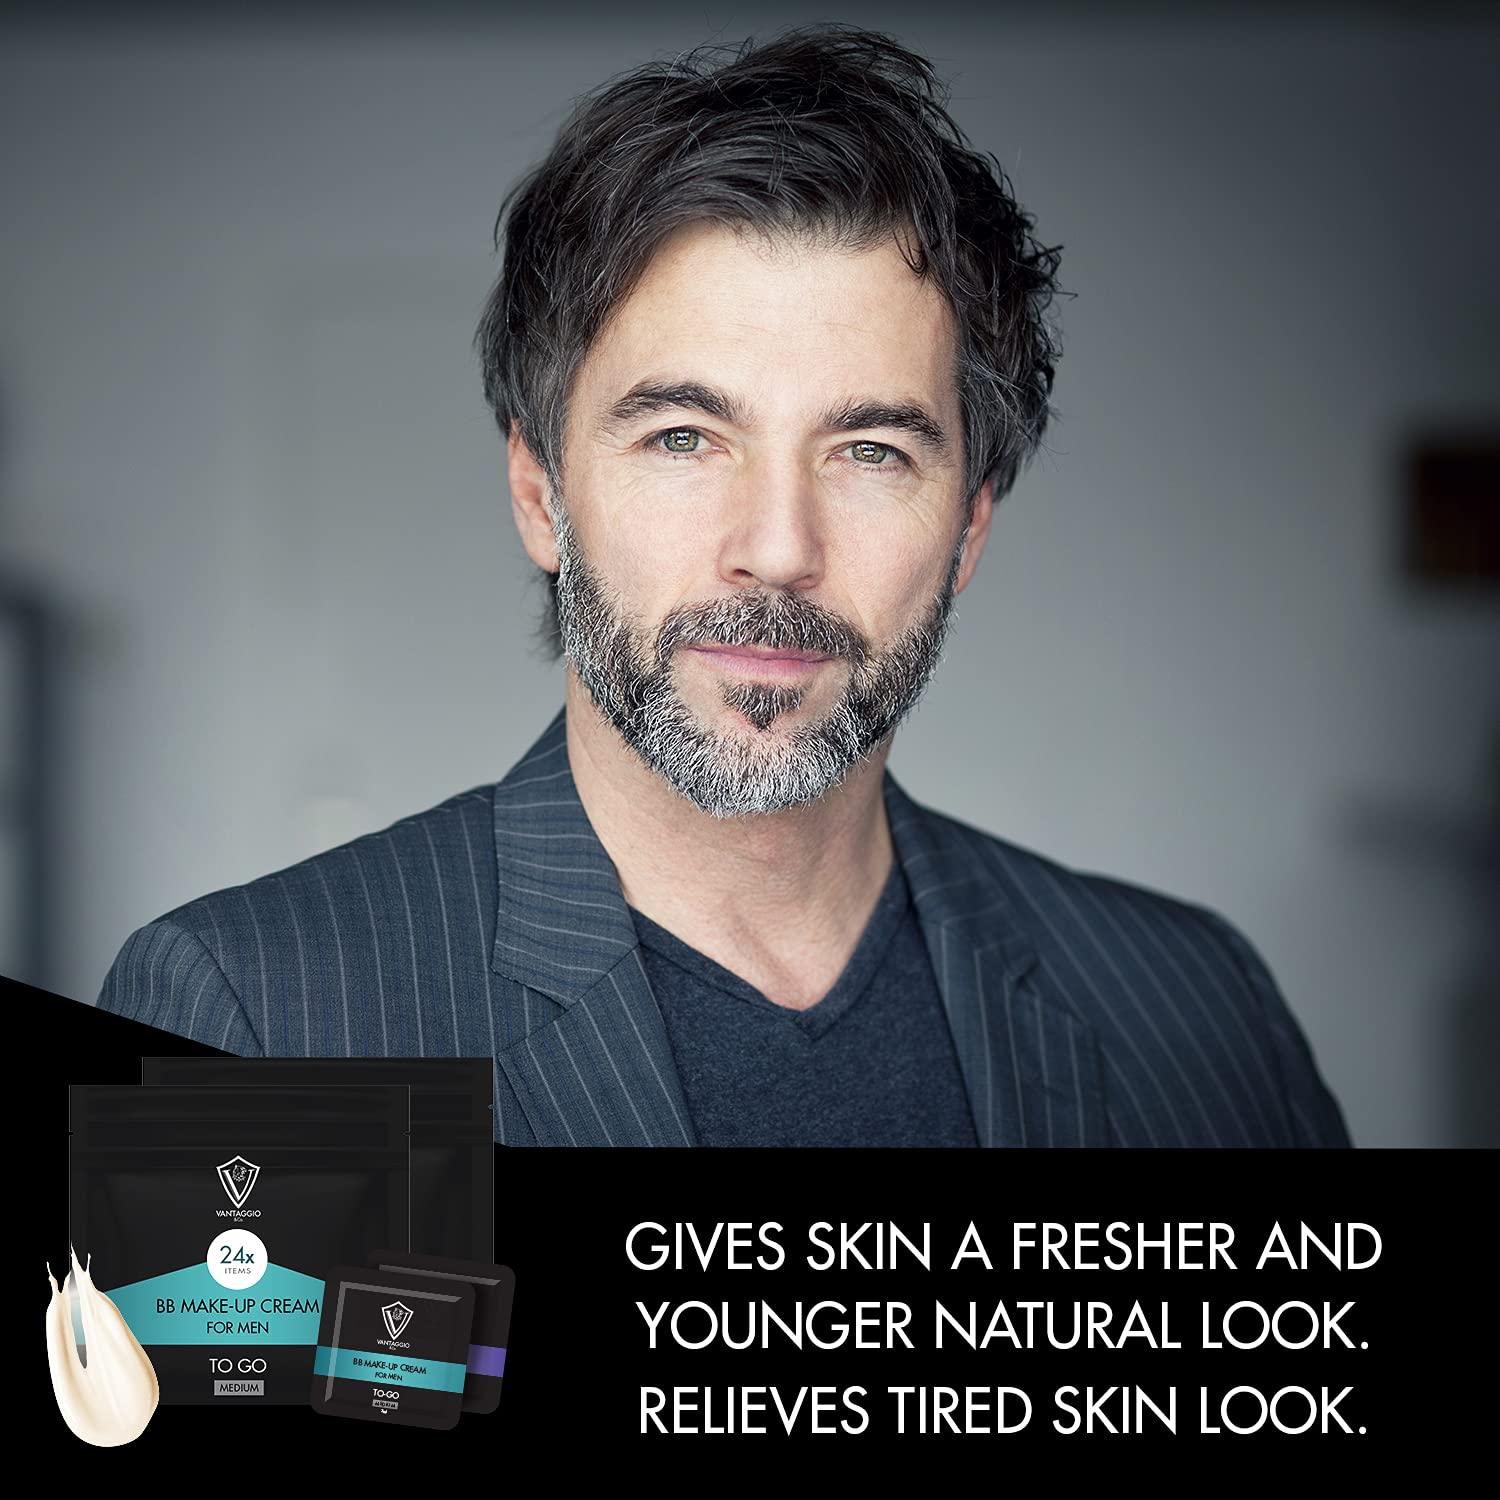 Vantaggio BB Make-Up Cream for Men - Light by Skincareheaven - Vysn